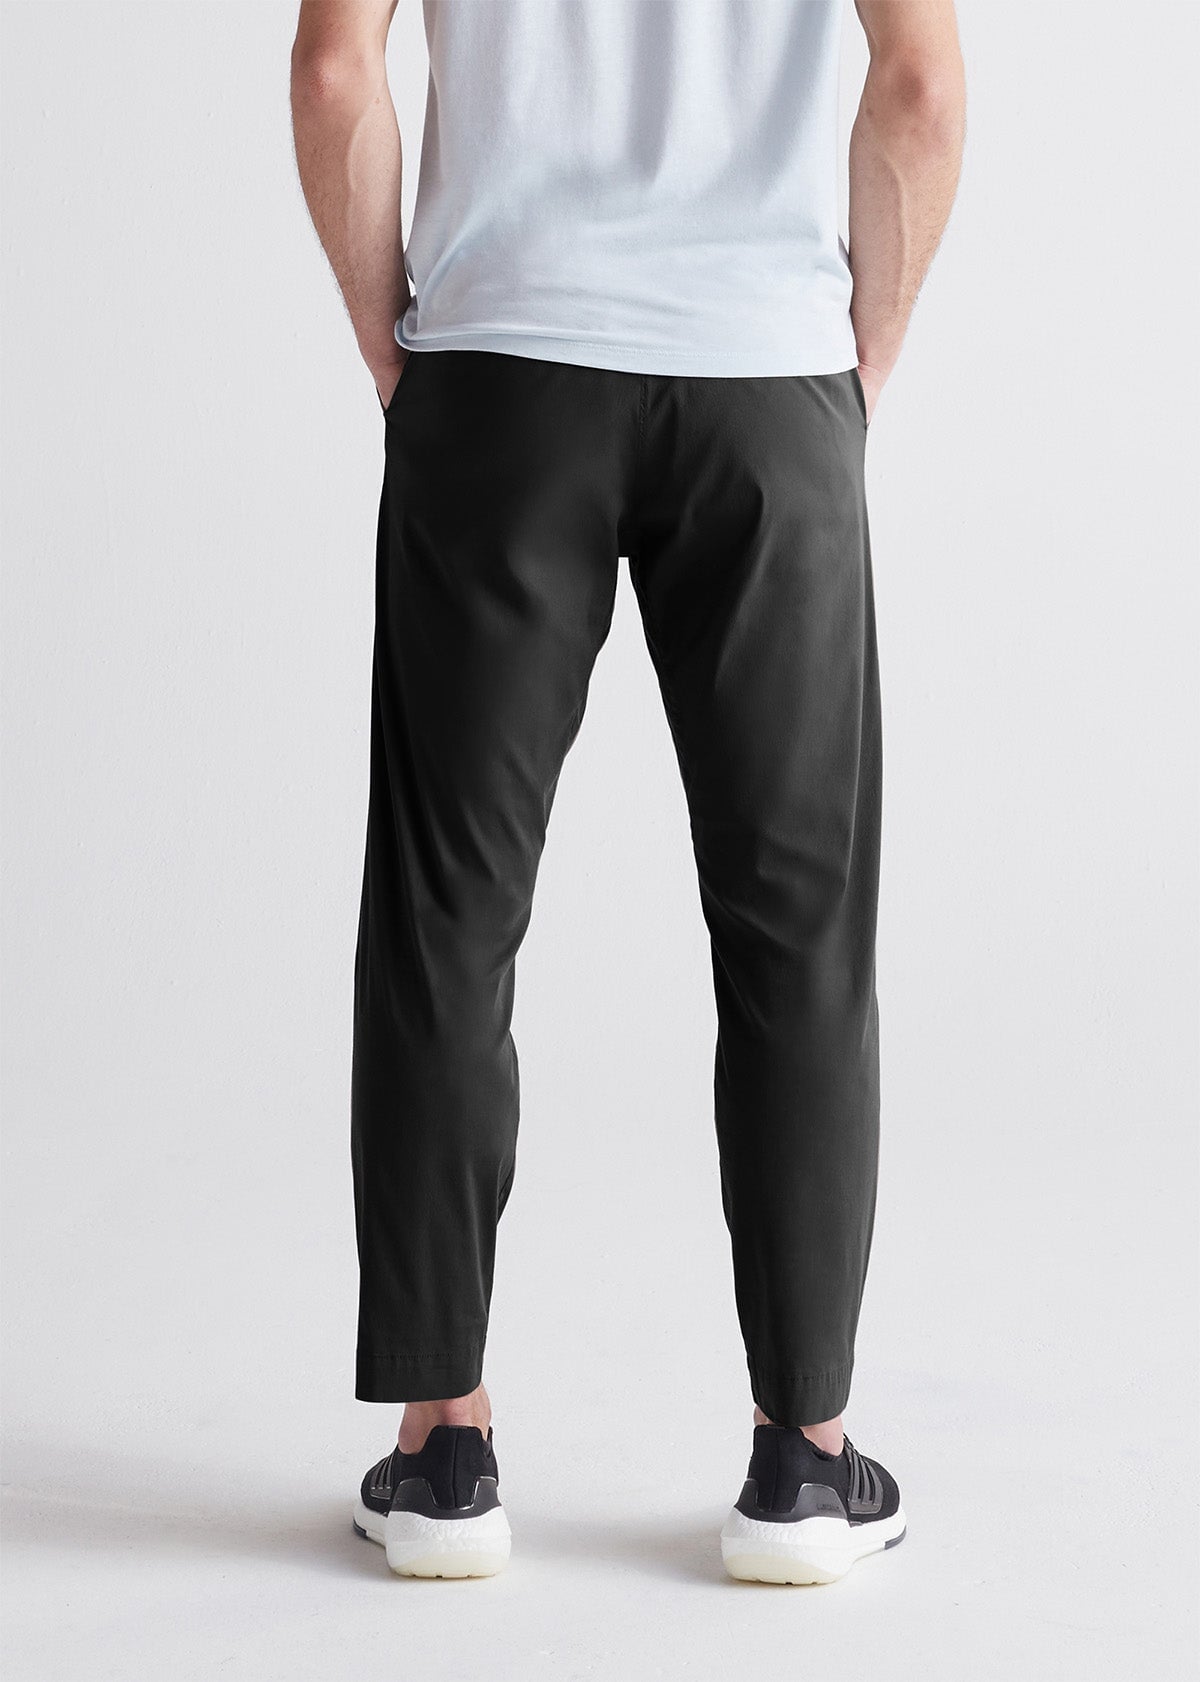 Sporte Leisure Plain Pant with Adjustable Waist - Black